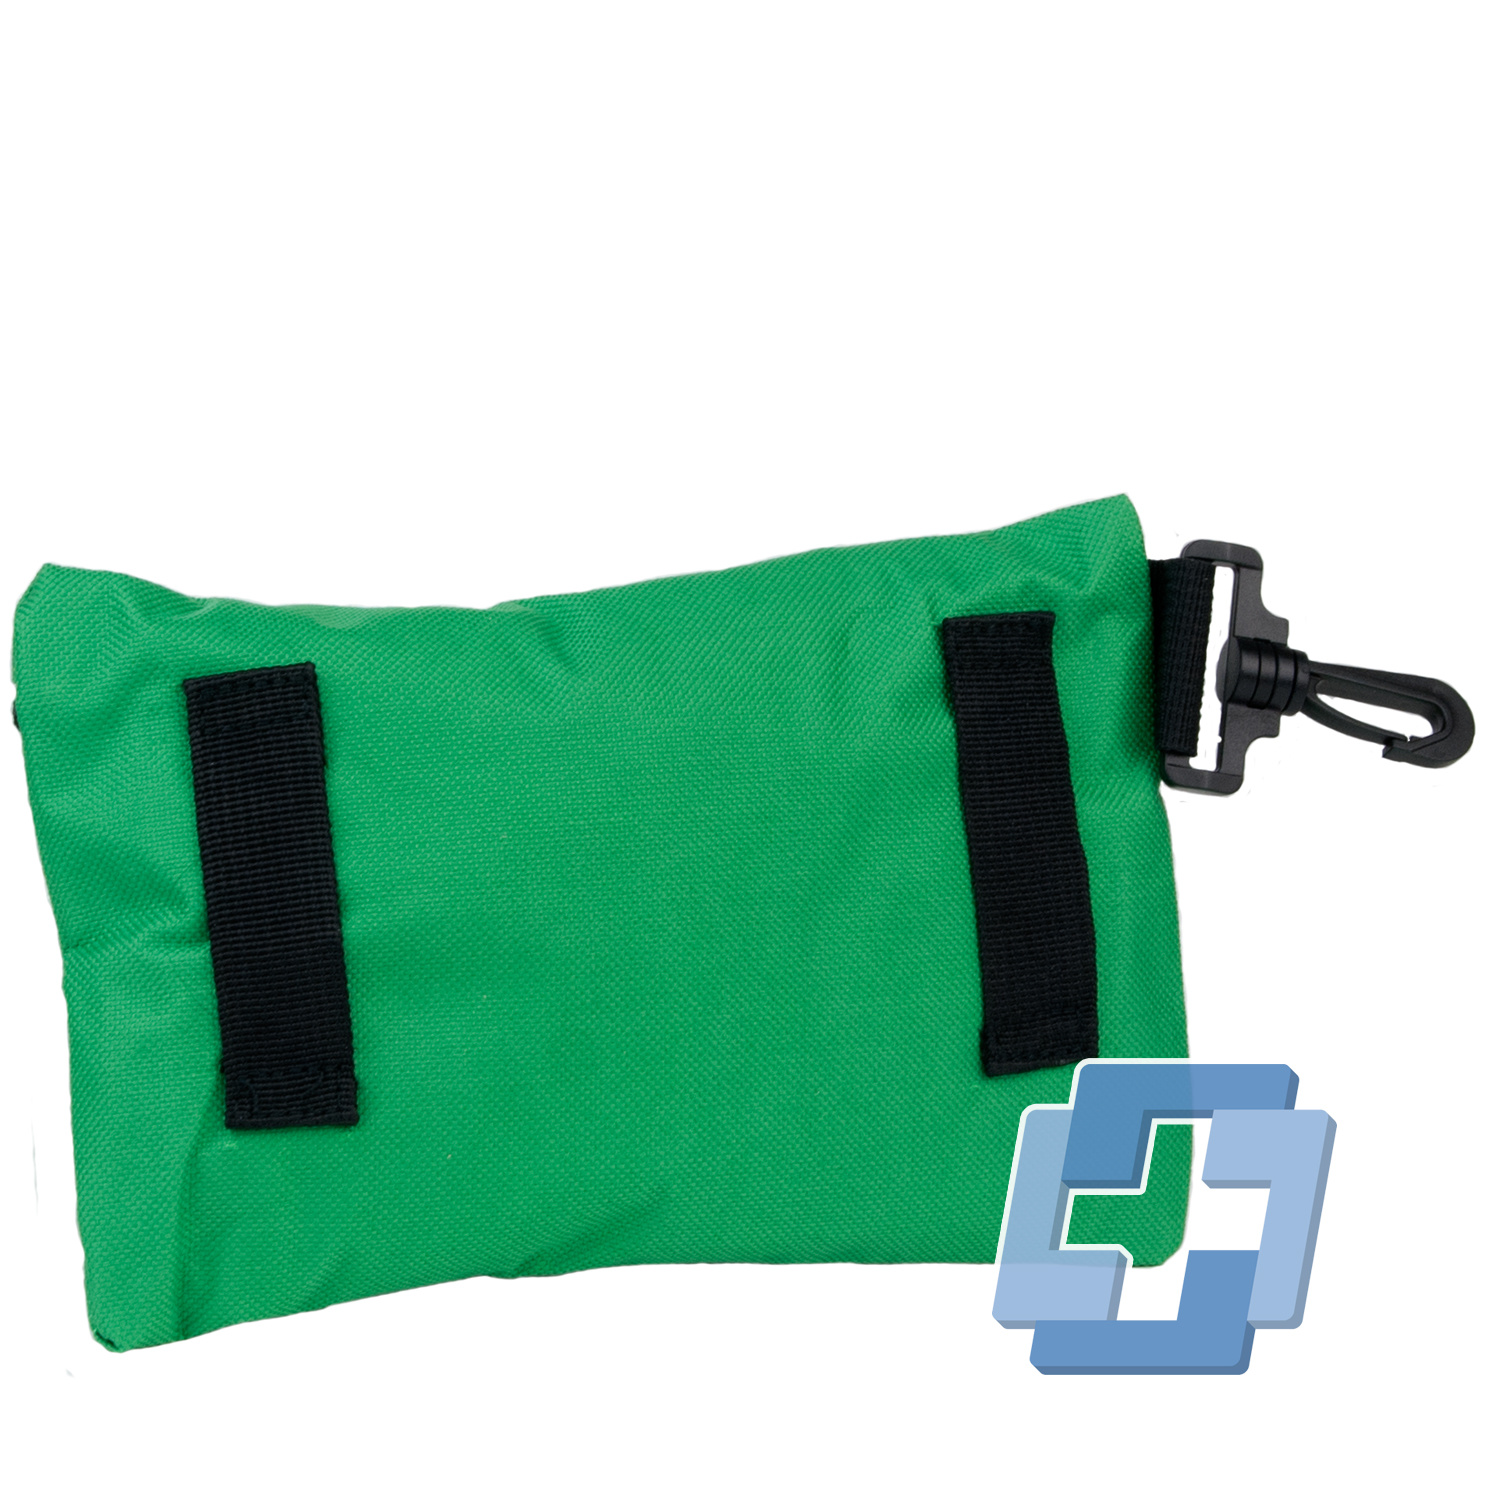 AED Safeset groen